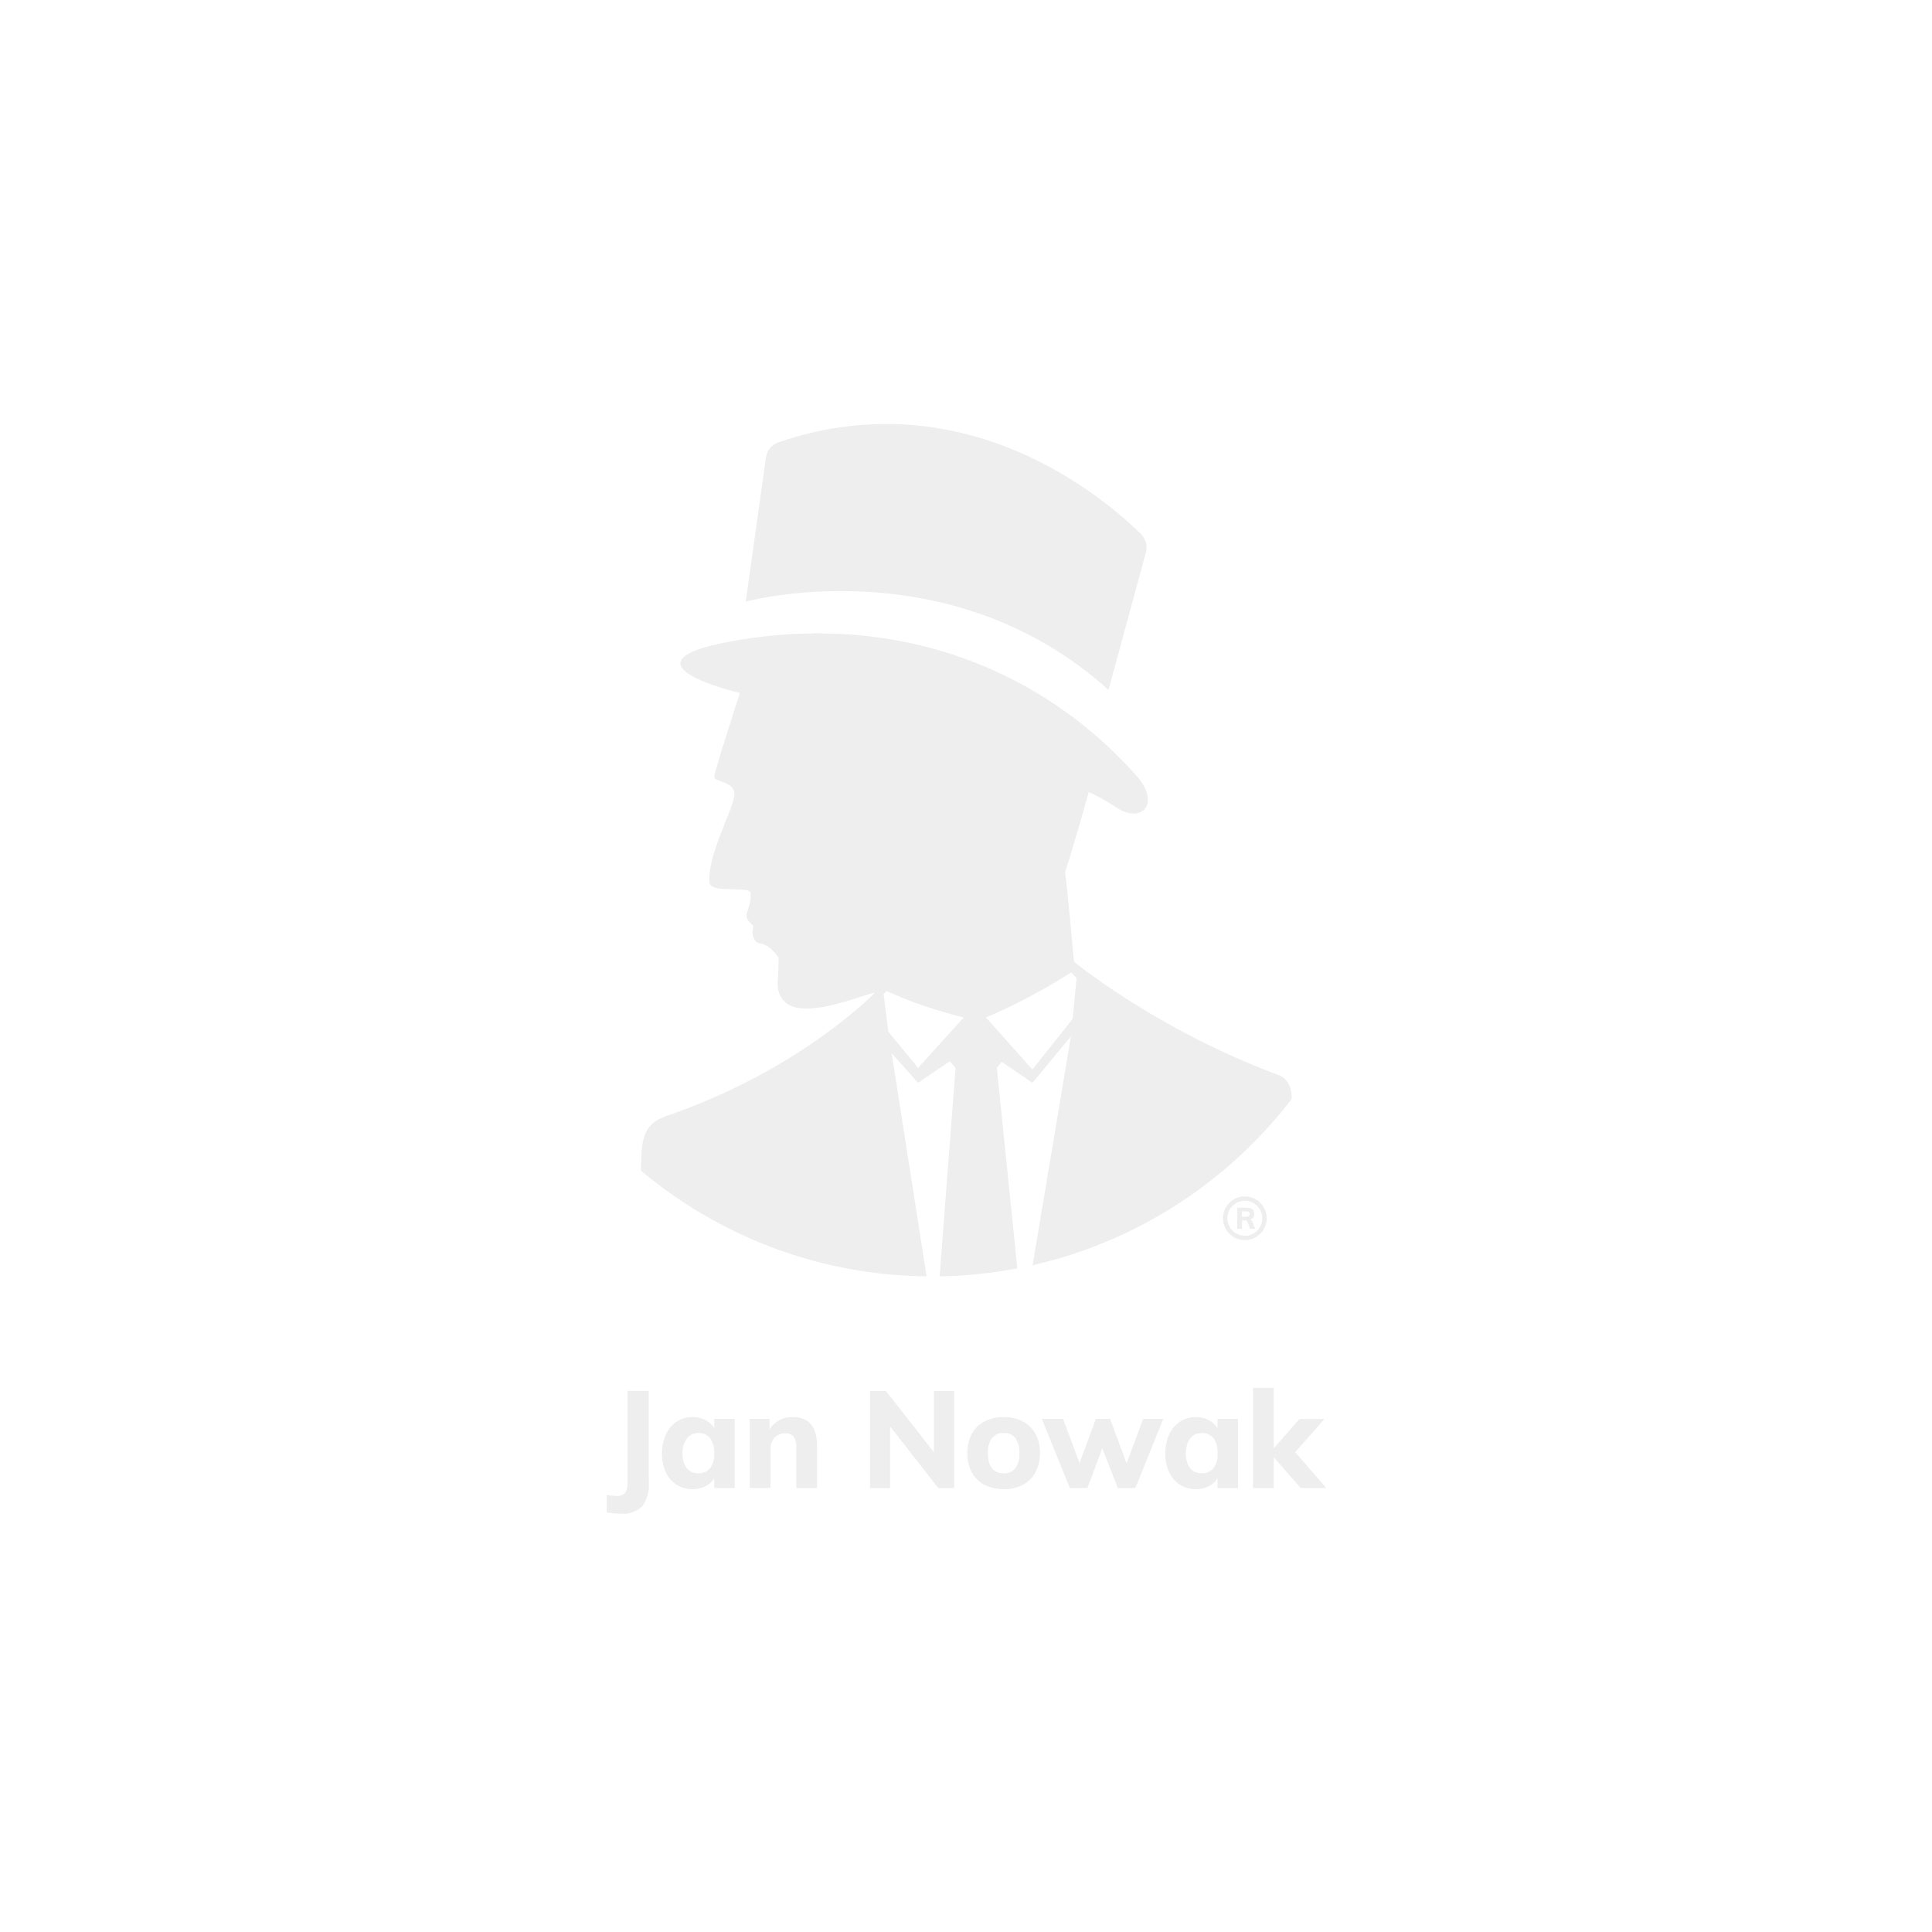 JAN NOWAK Modell JAN II (C001 II) Aktenschrank Büroschrank 185 cm (115 cm breit): Grau-Blau